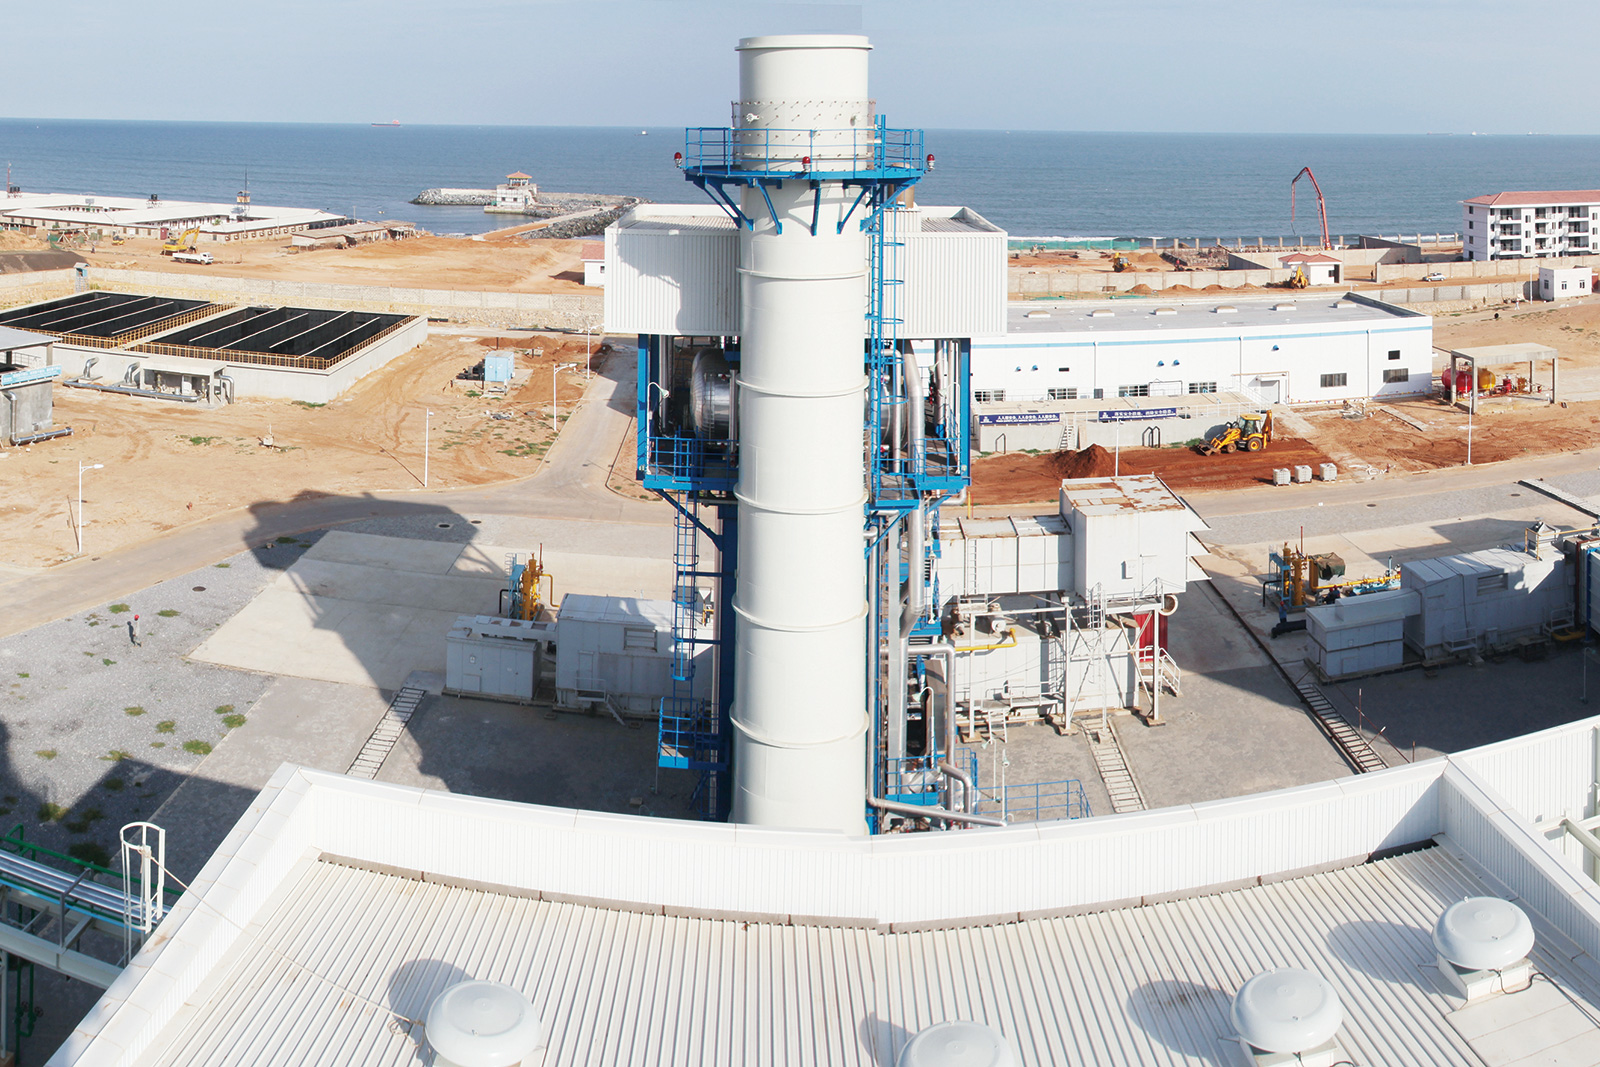 Ghana thermal power station undertaken by Shenzhen Energy